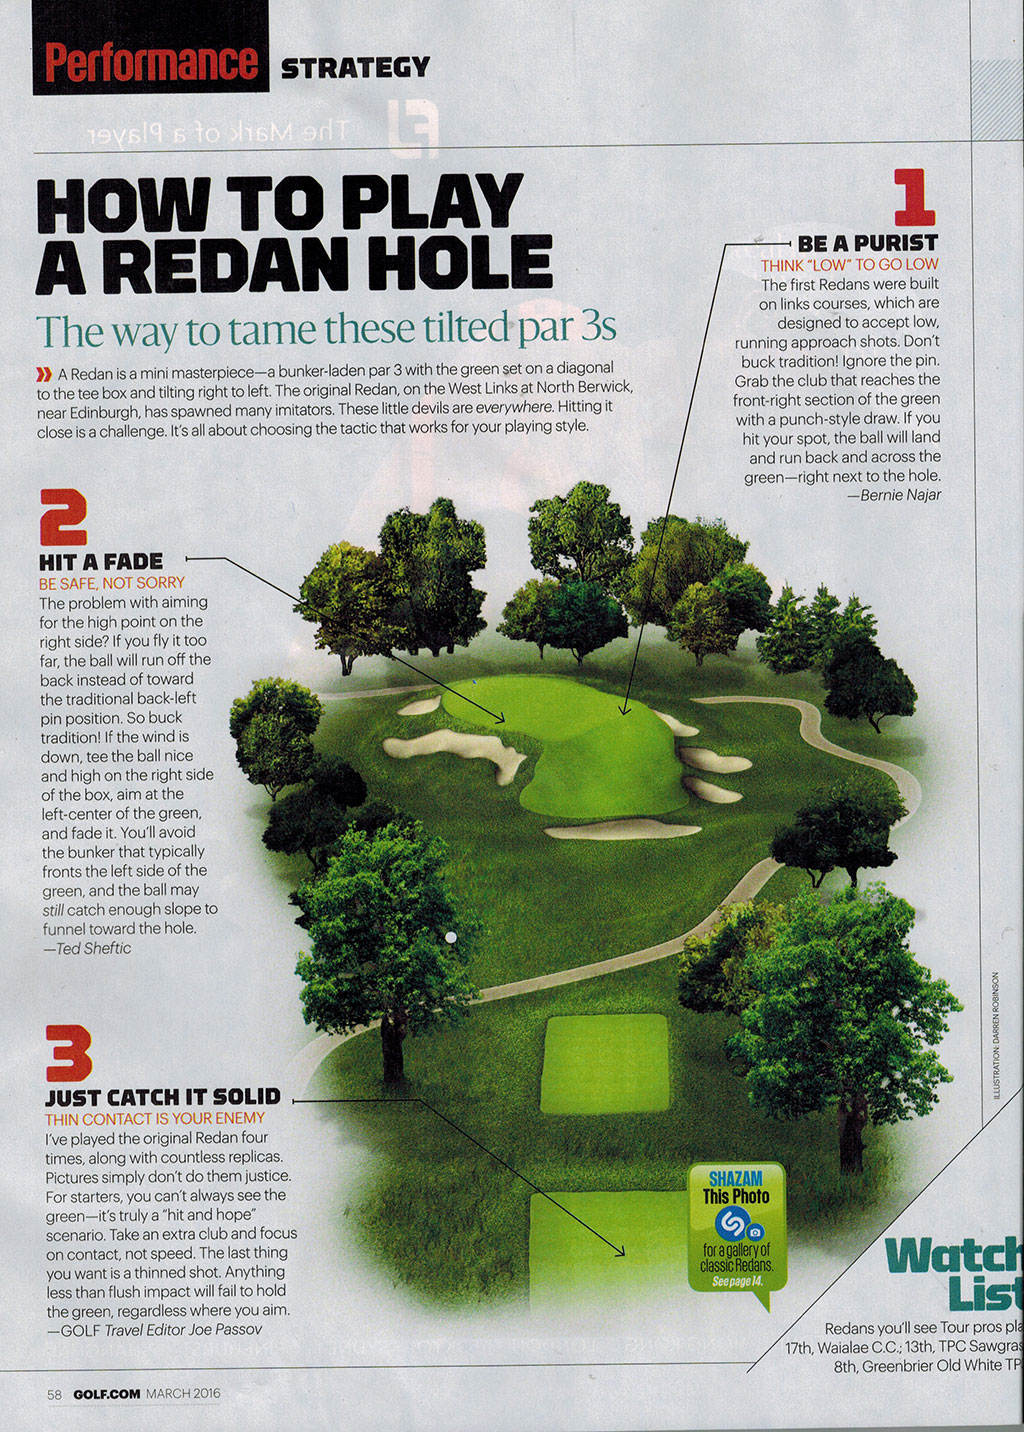 Golf magazine's article on Redan holes